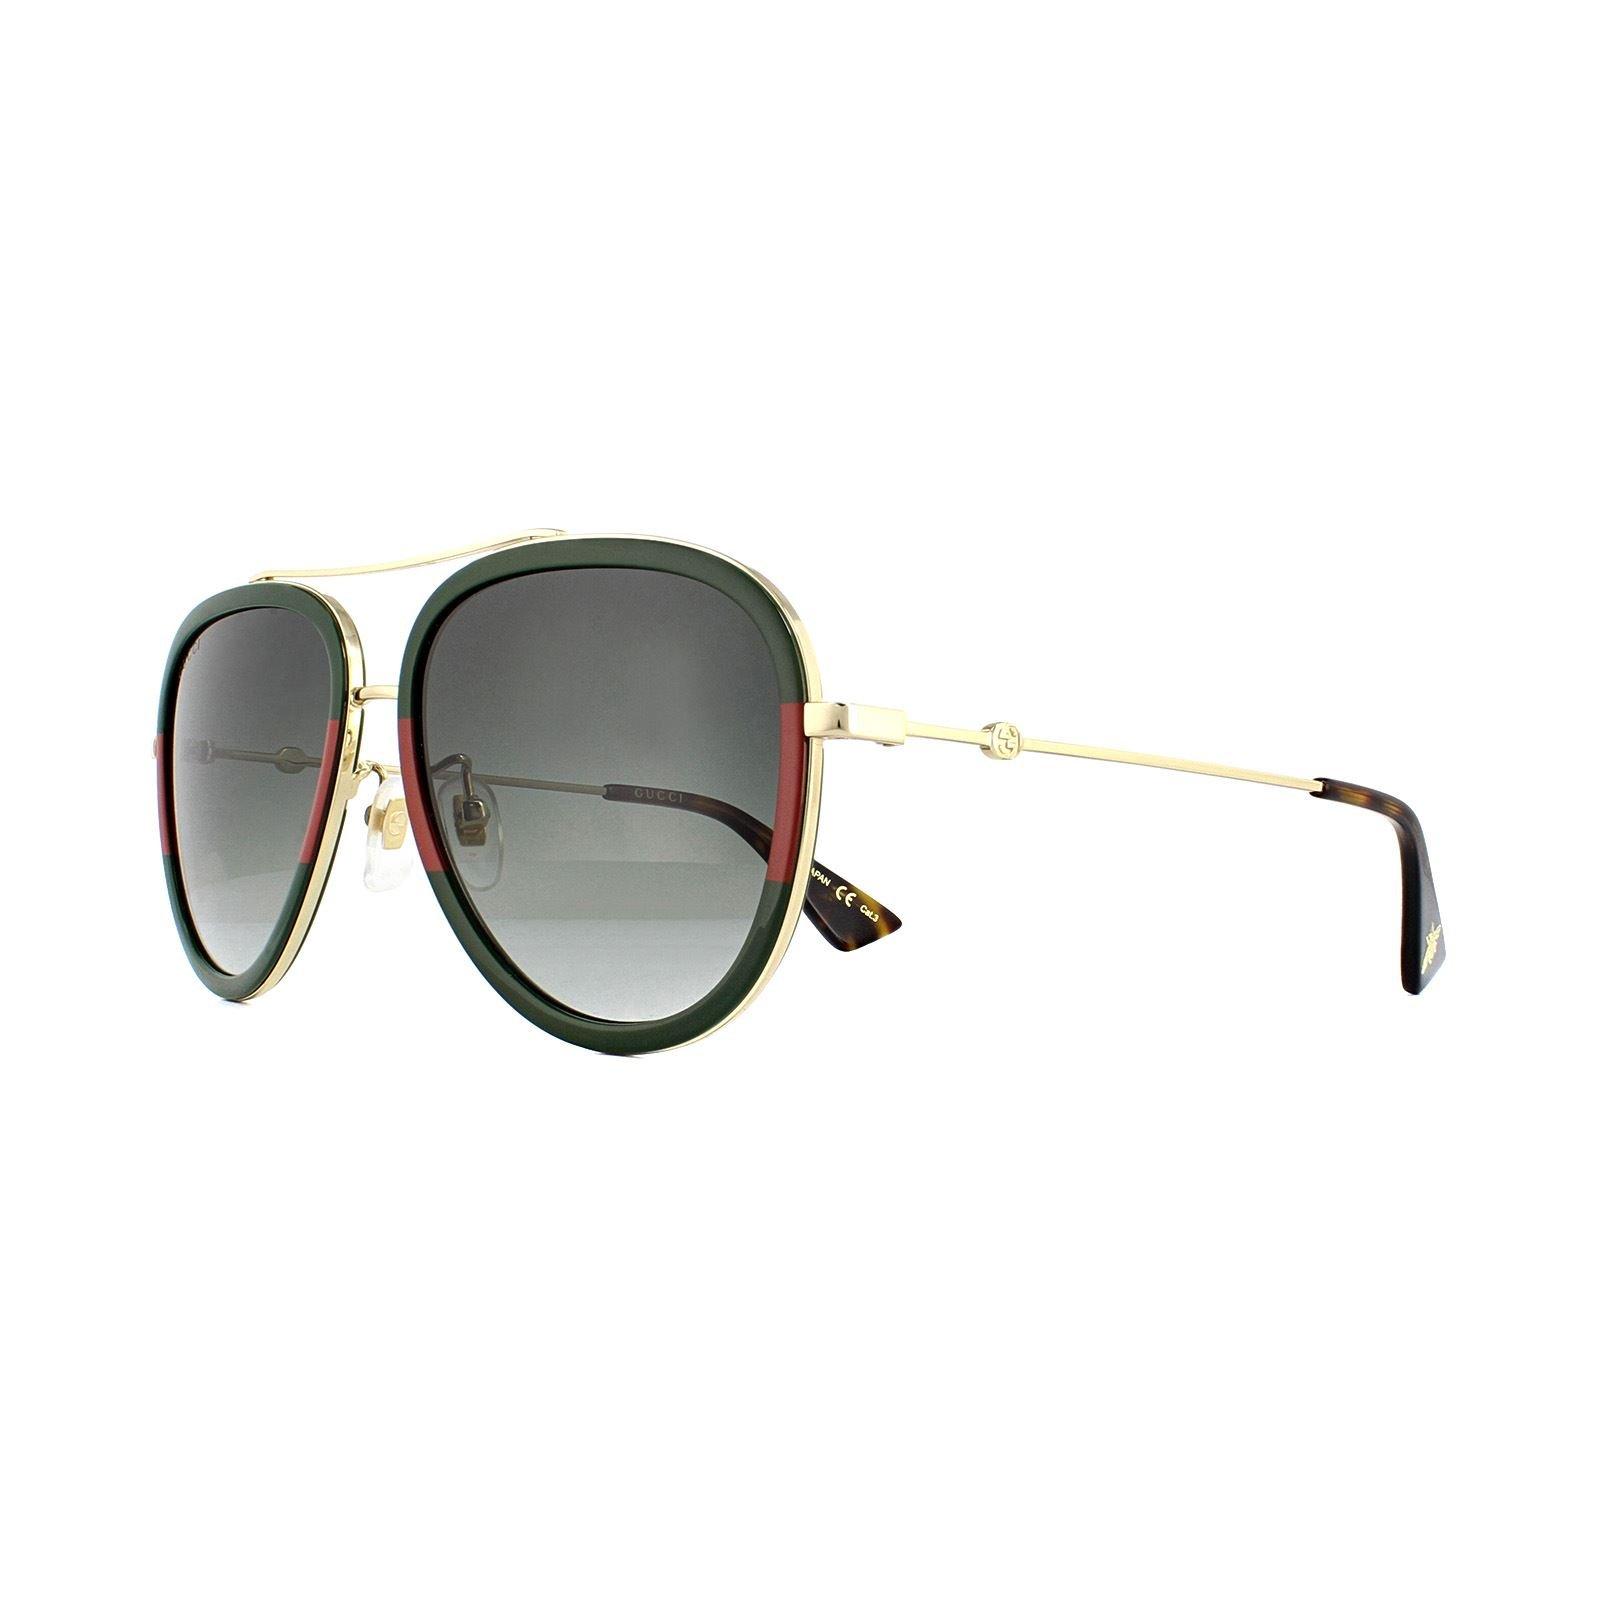 Gucci - Oval Frame Sunglasses - Black Red - Gucci Eyewear - Avvenice